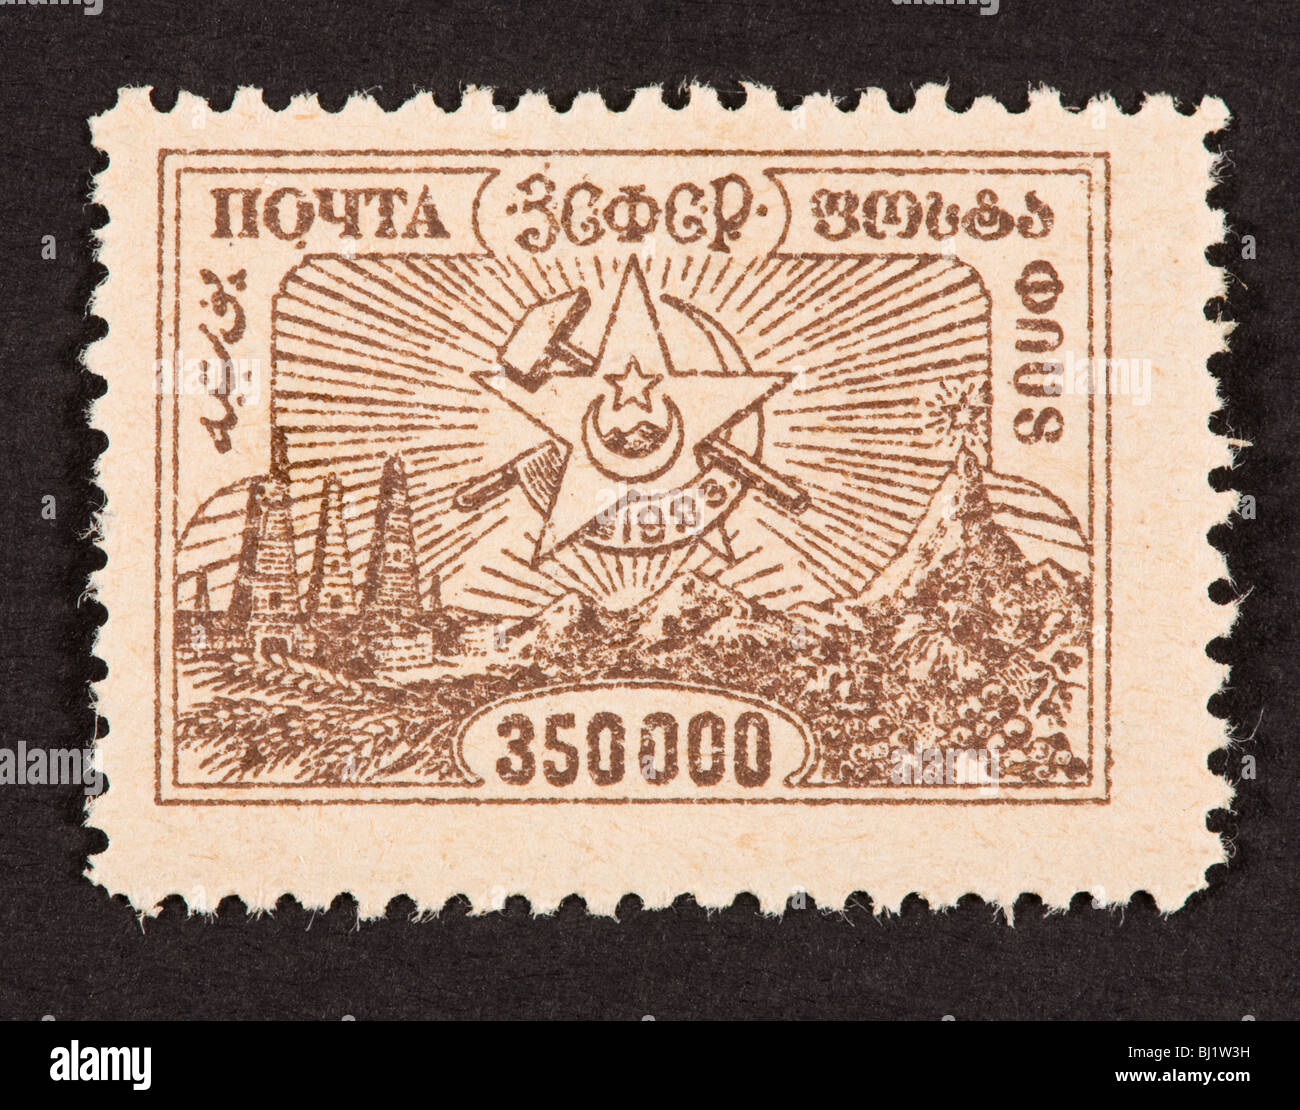 Postage stamp from the Transcaucasian Federated Republics (Armenia, Georgia and Azerbaijan) depicting Soviet symbols. Stock Photo